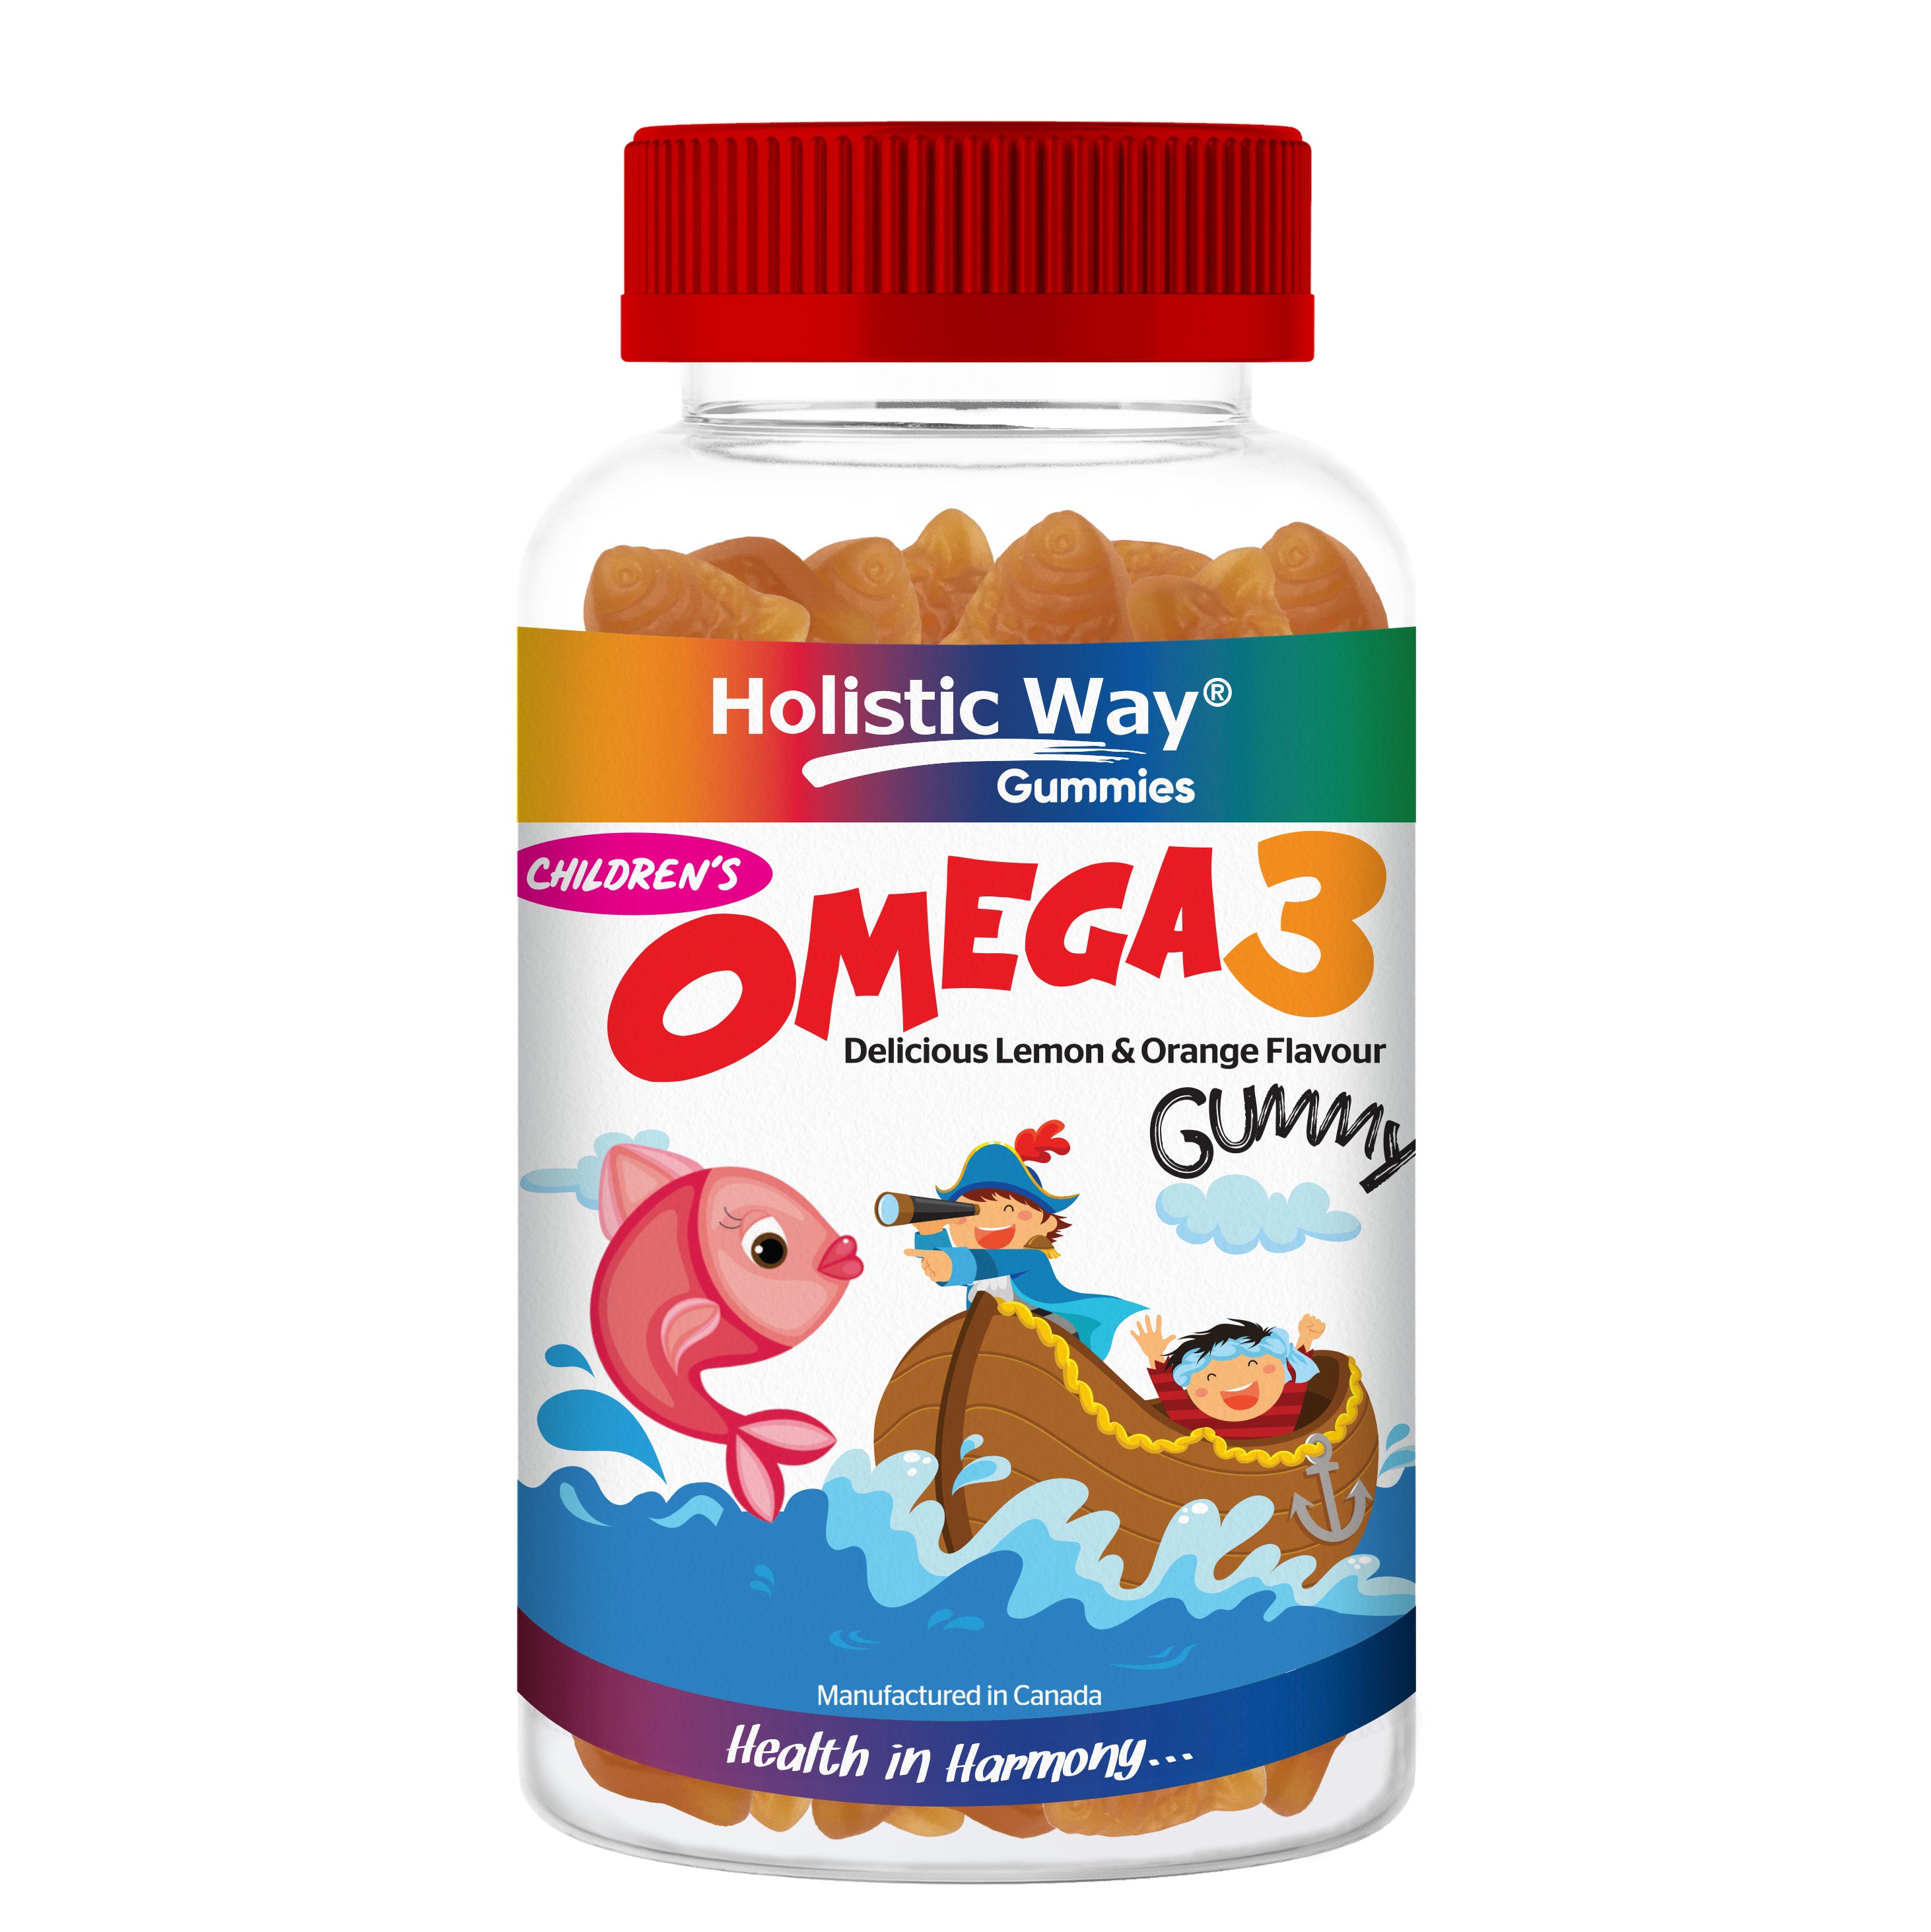 Holistic Way Children’s Omega 3 Gummy (90 Gummies)